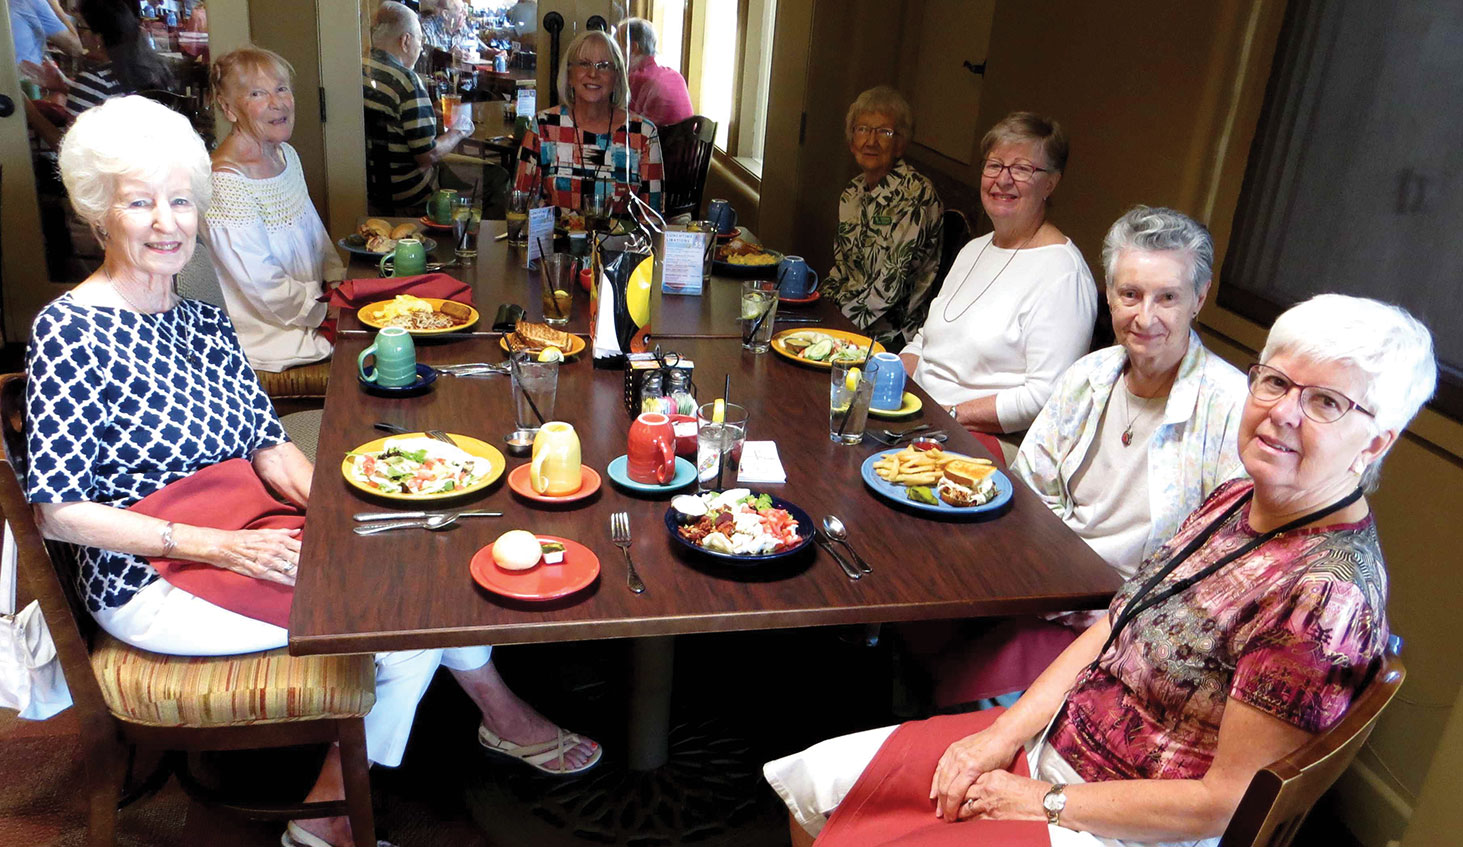 These happy Senior Village members enjoyed celebrating their birthdays together.